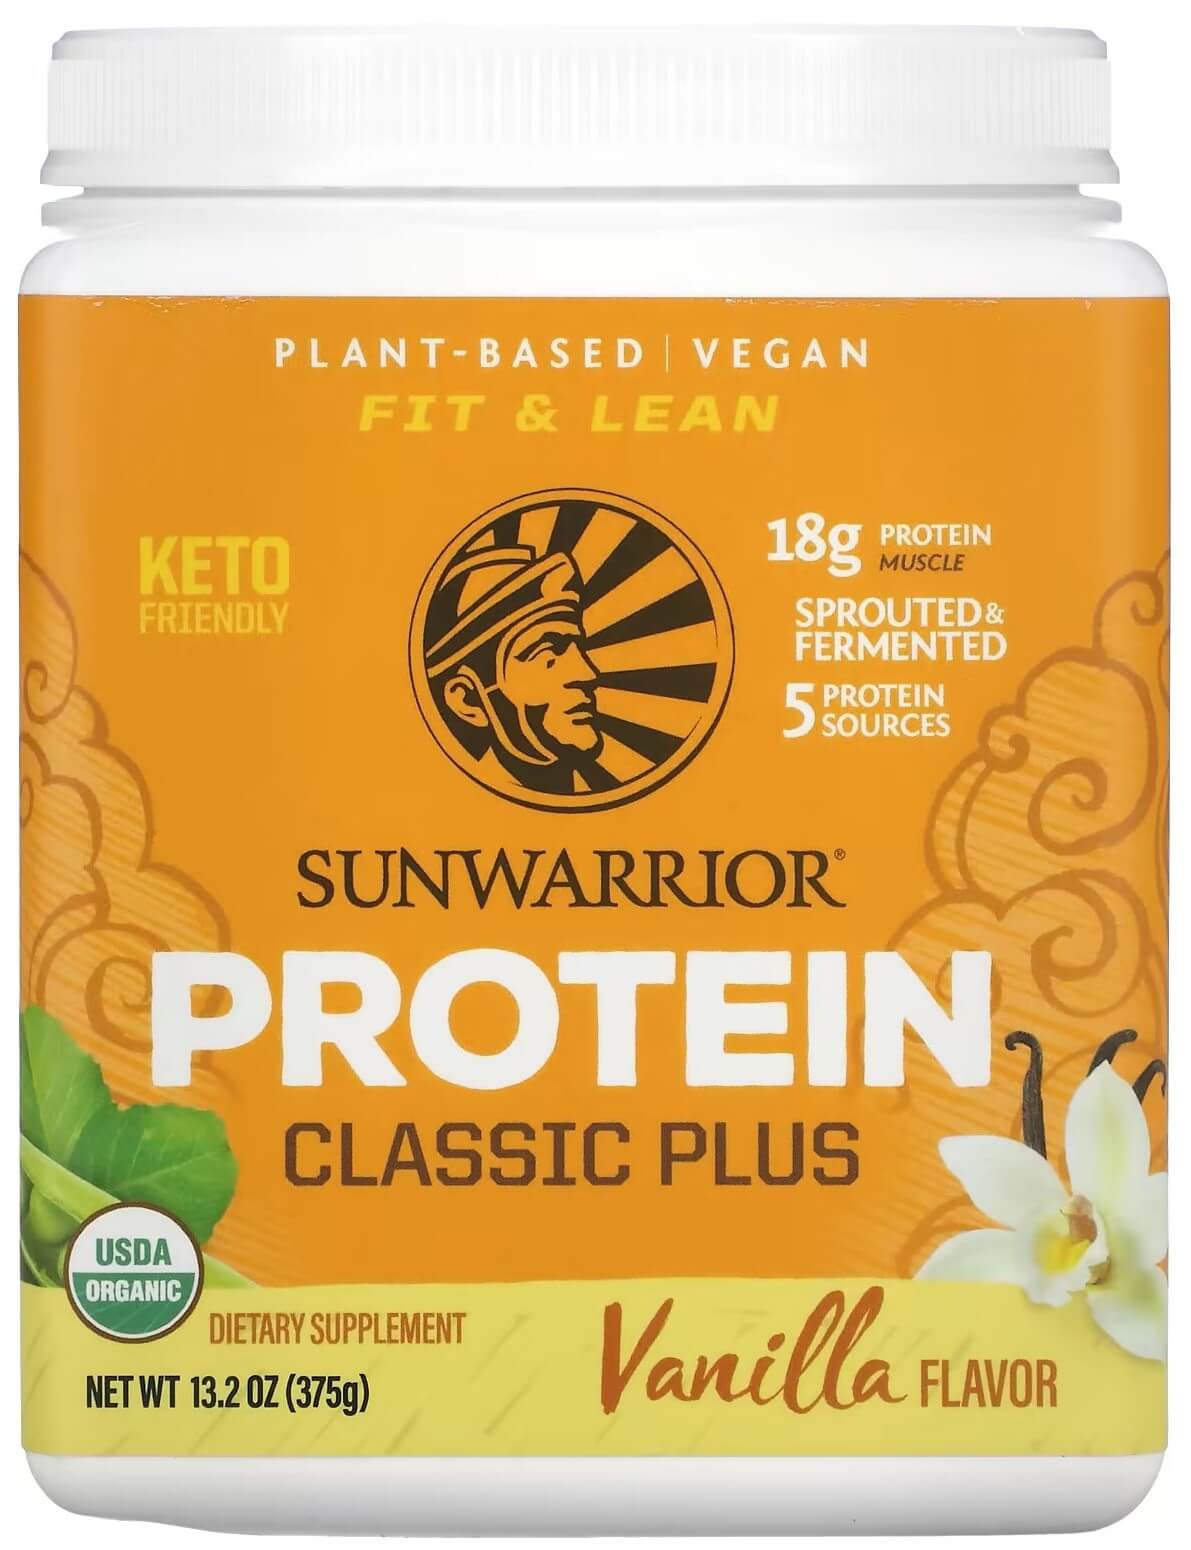 Sunwarrior Protein Classic Plus 375 g - bez příchuti